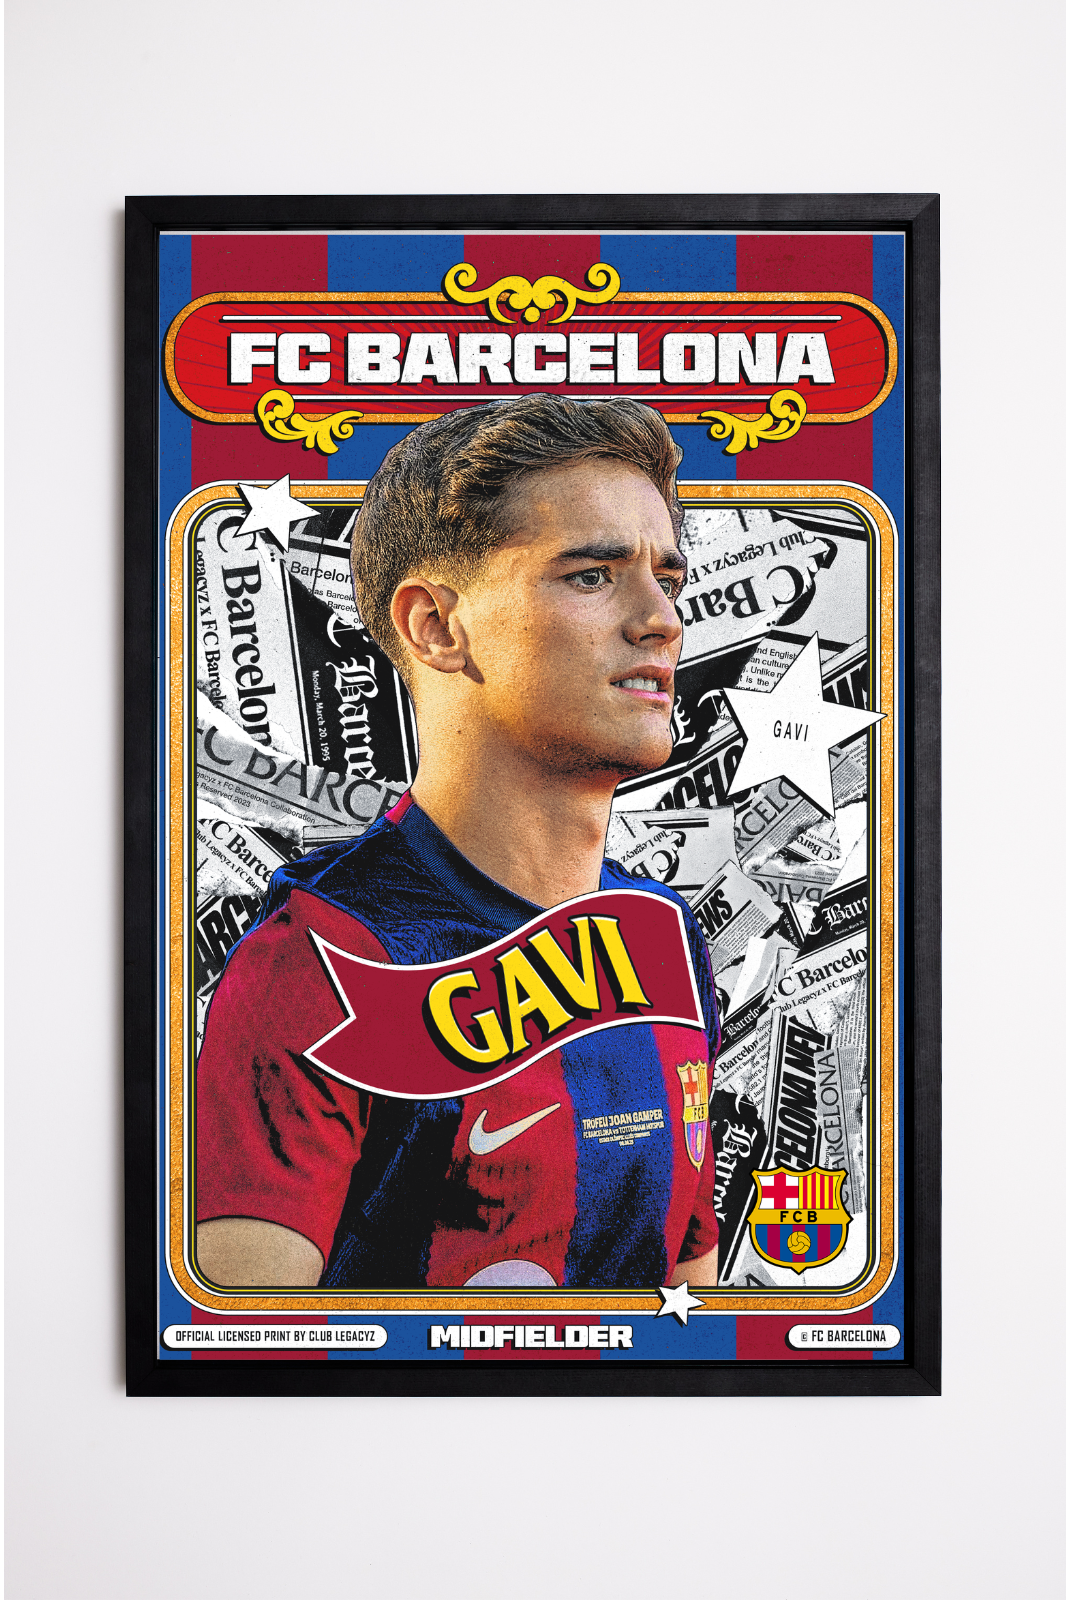 FC Barcelona - Gavi Retro Poster limited to 100